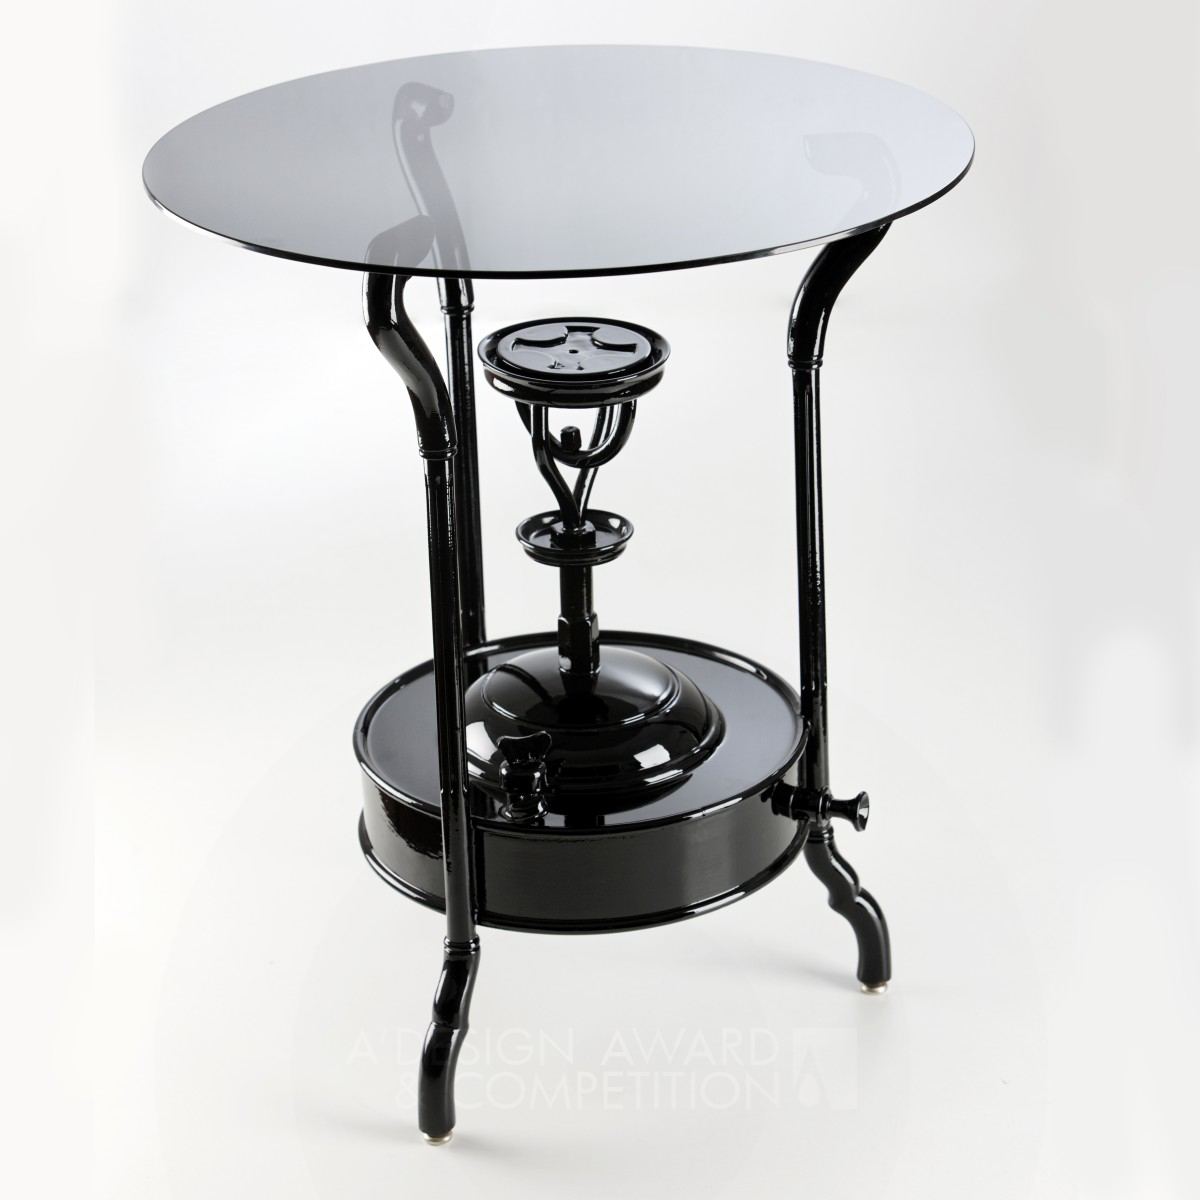  Baboor Dawar Line Table by Dalia Sadany Iron Furniture Design Award Winner 2012 